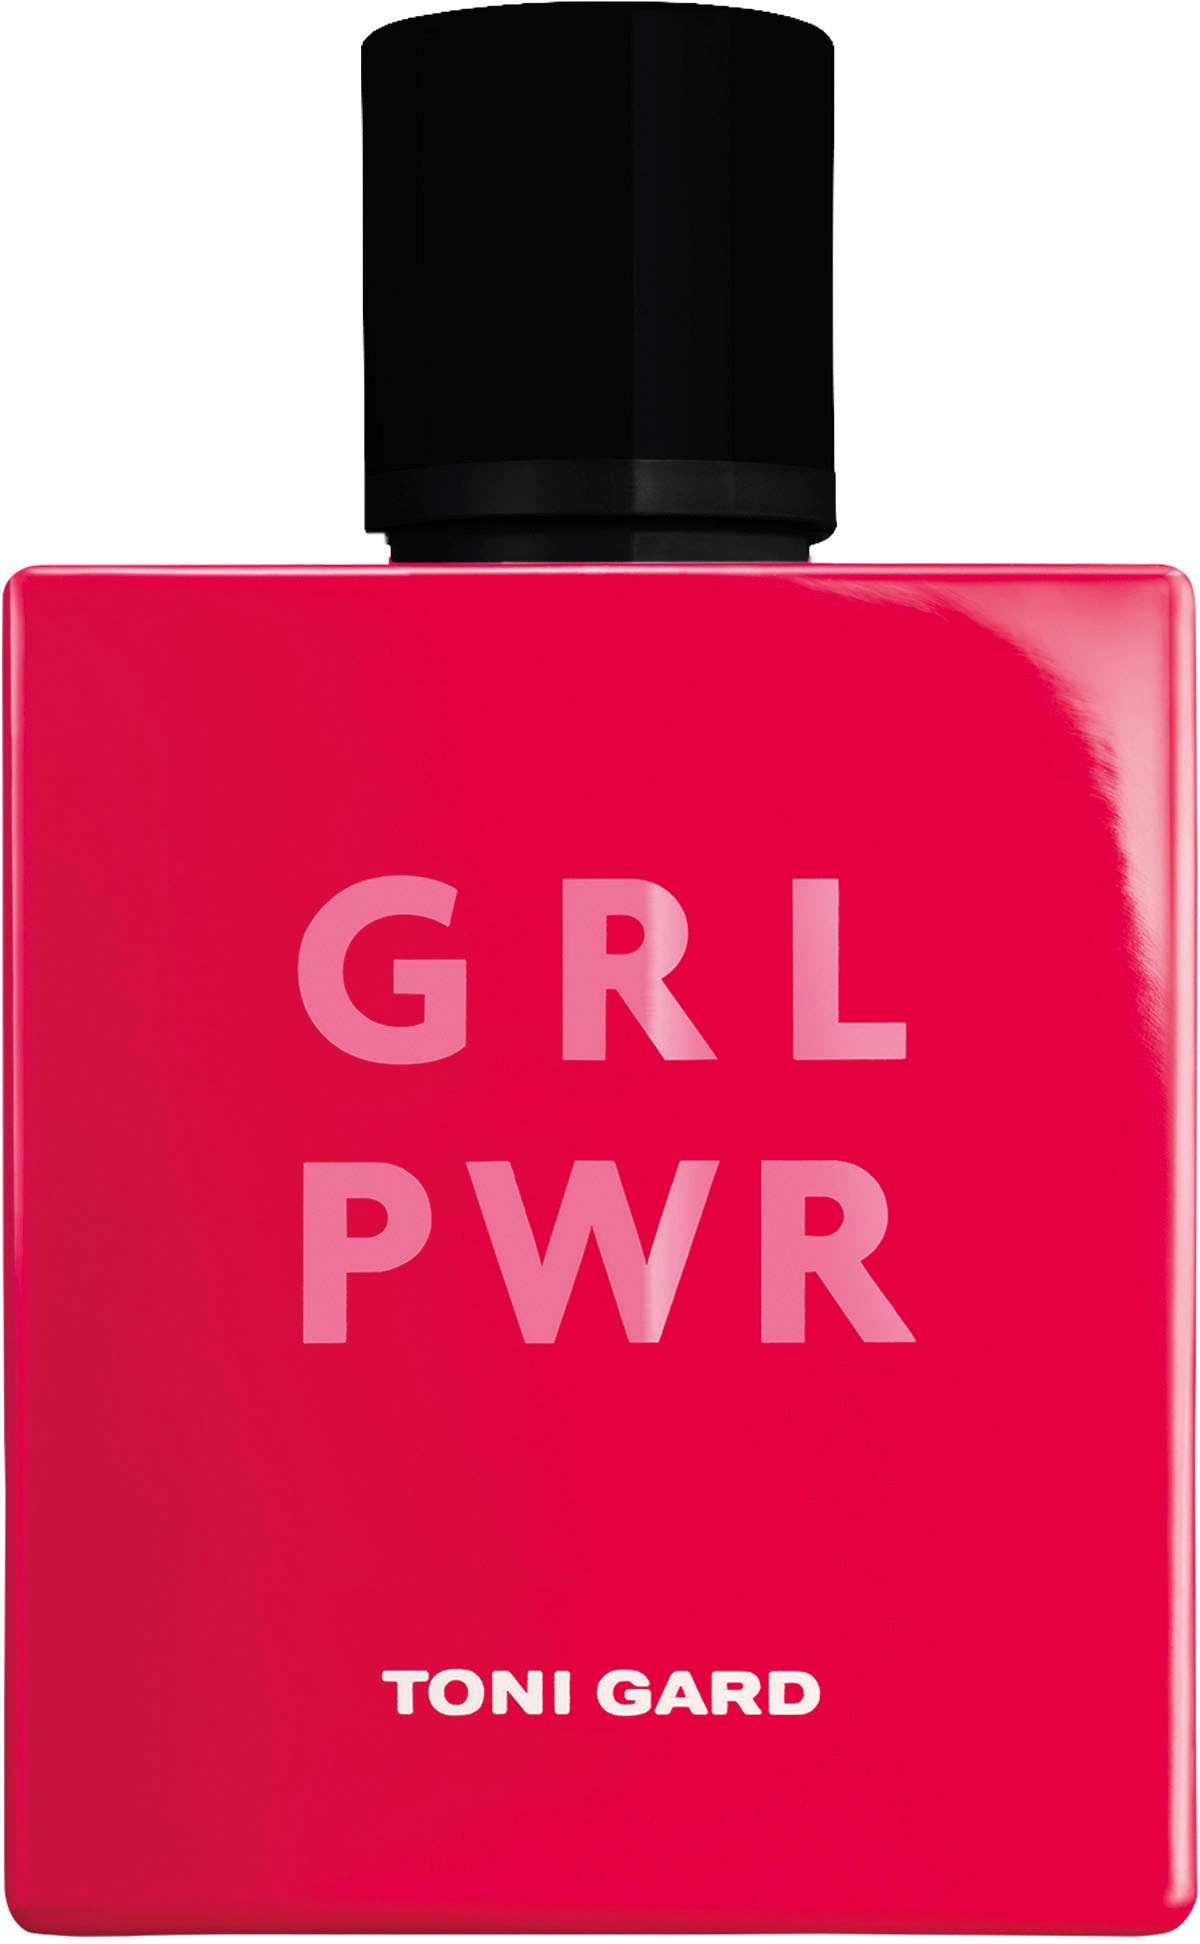 TONI de Eau OTTOversand GARD bei Parfum »GRL EdP« PWR